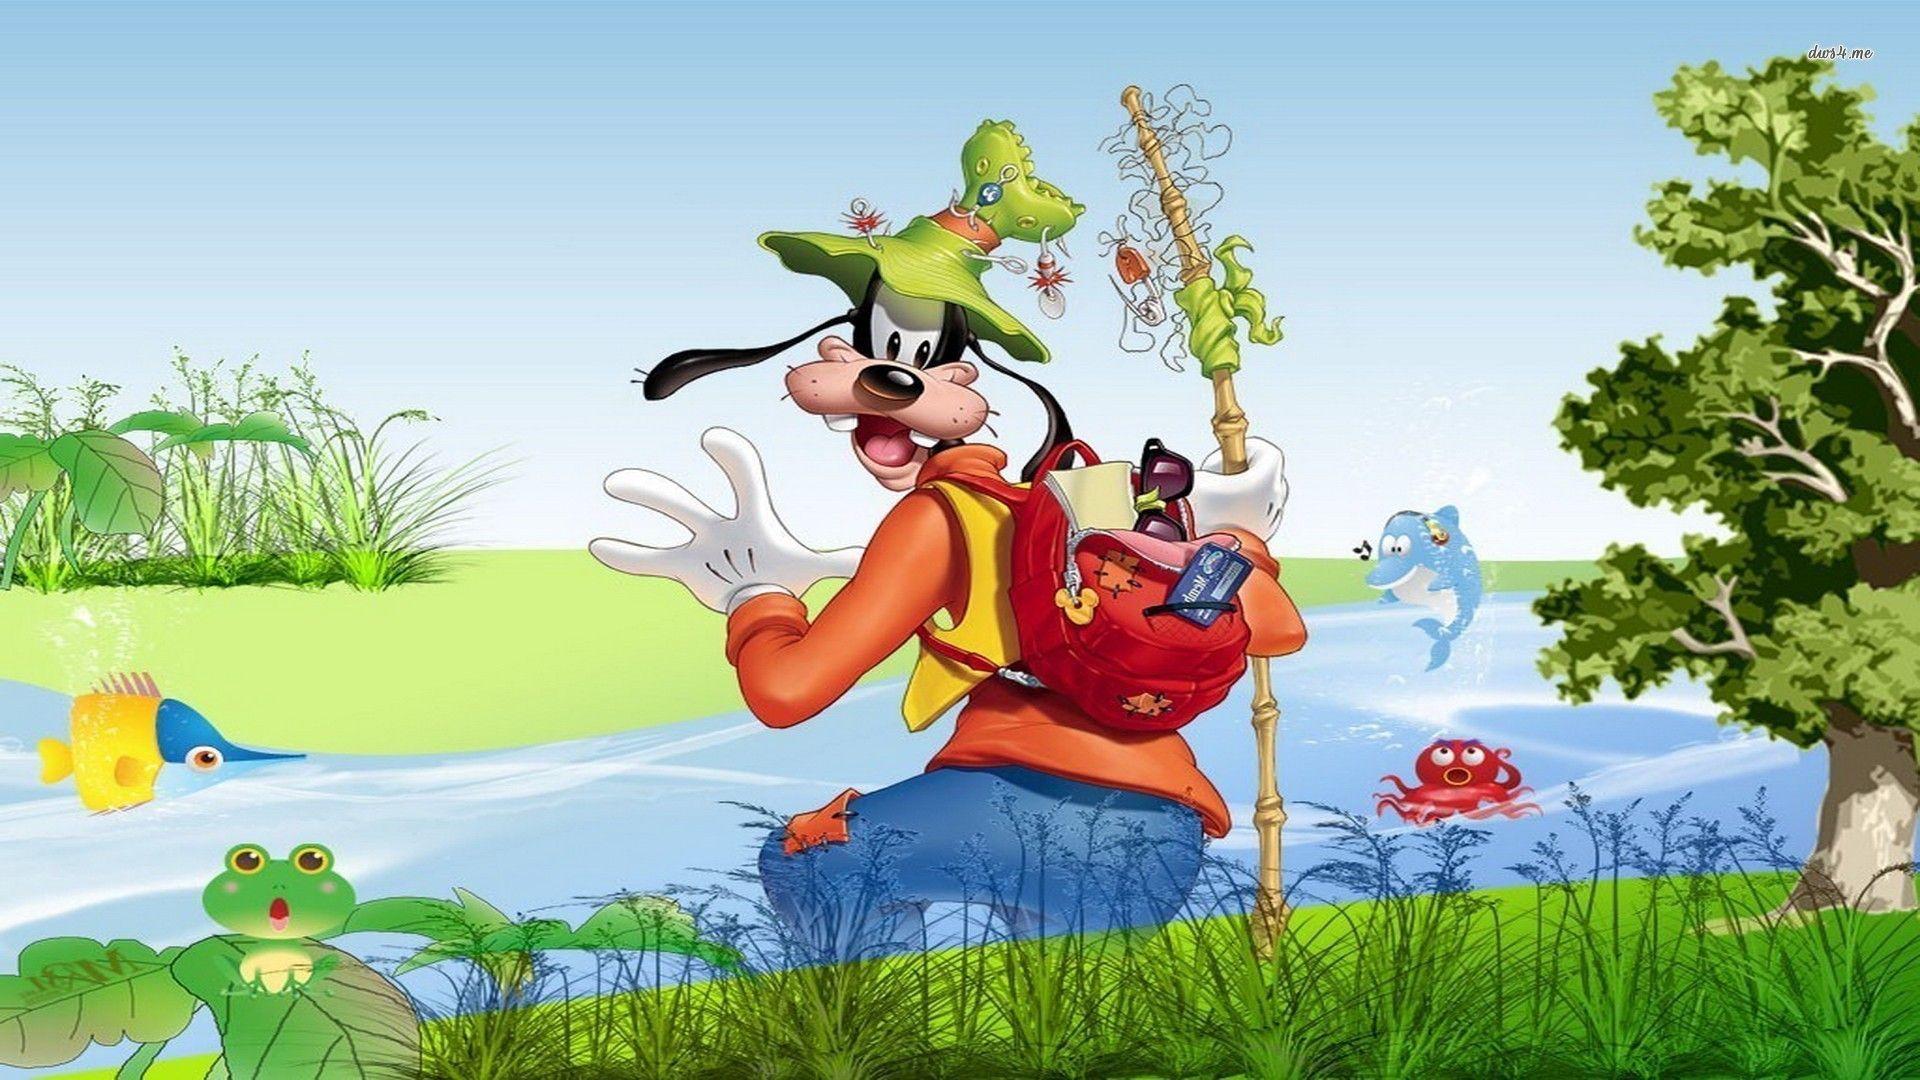 Goofy Disney Characters From Cartoons Poster Wallpaper Hd 3840x2160   Wallpapers13com